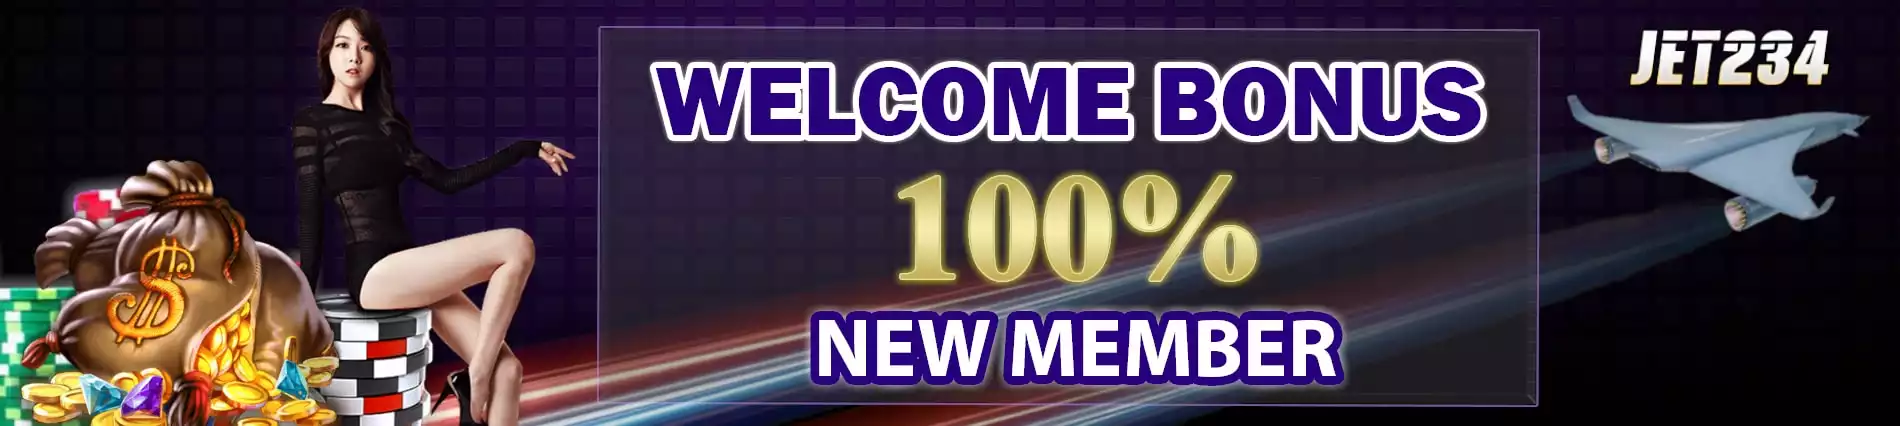 Welcome Bonus 100% New Member